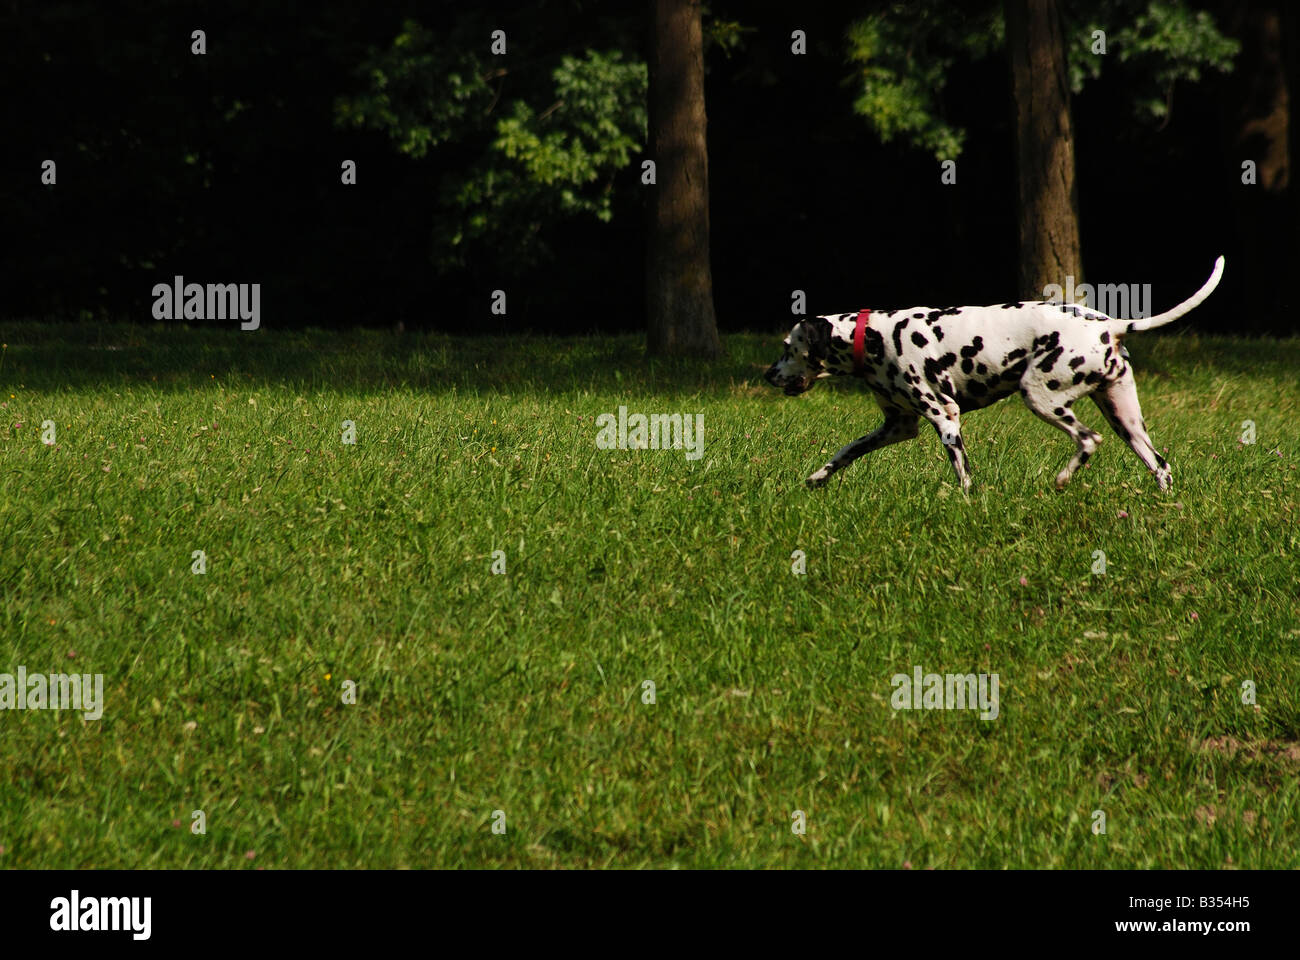 Dalmatian dog walking on grass Stock Photo